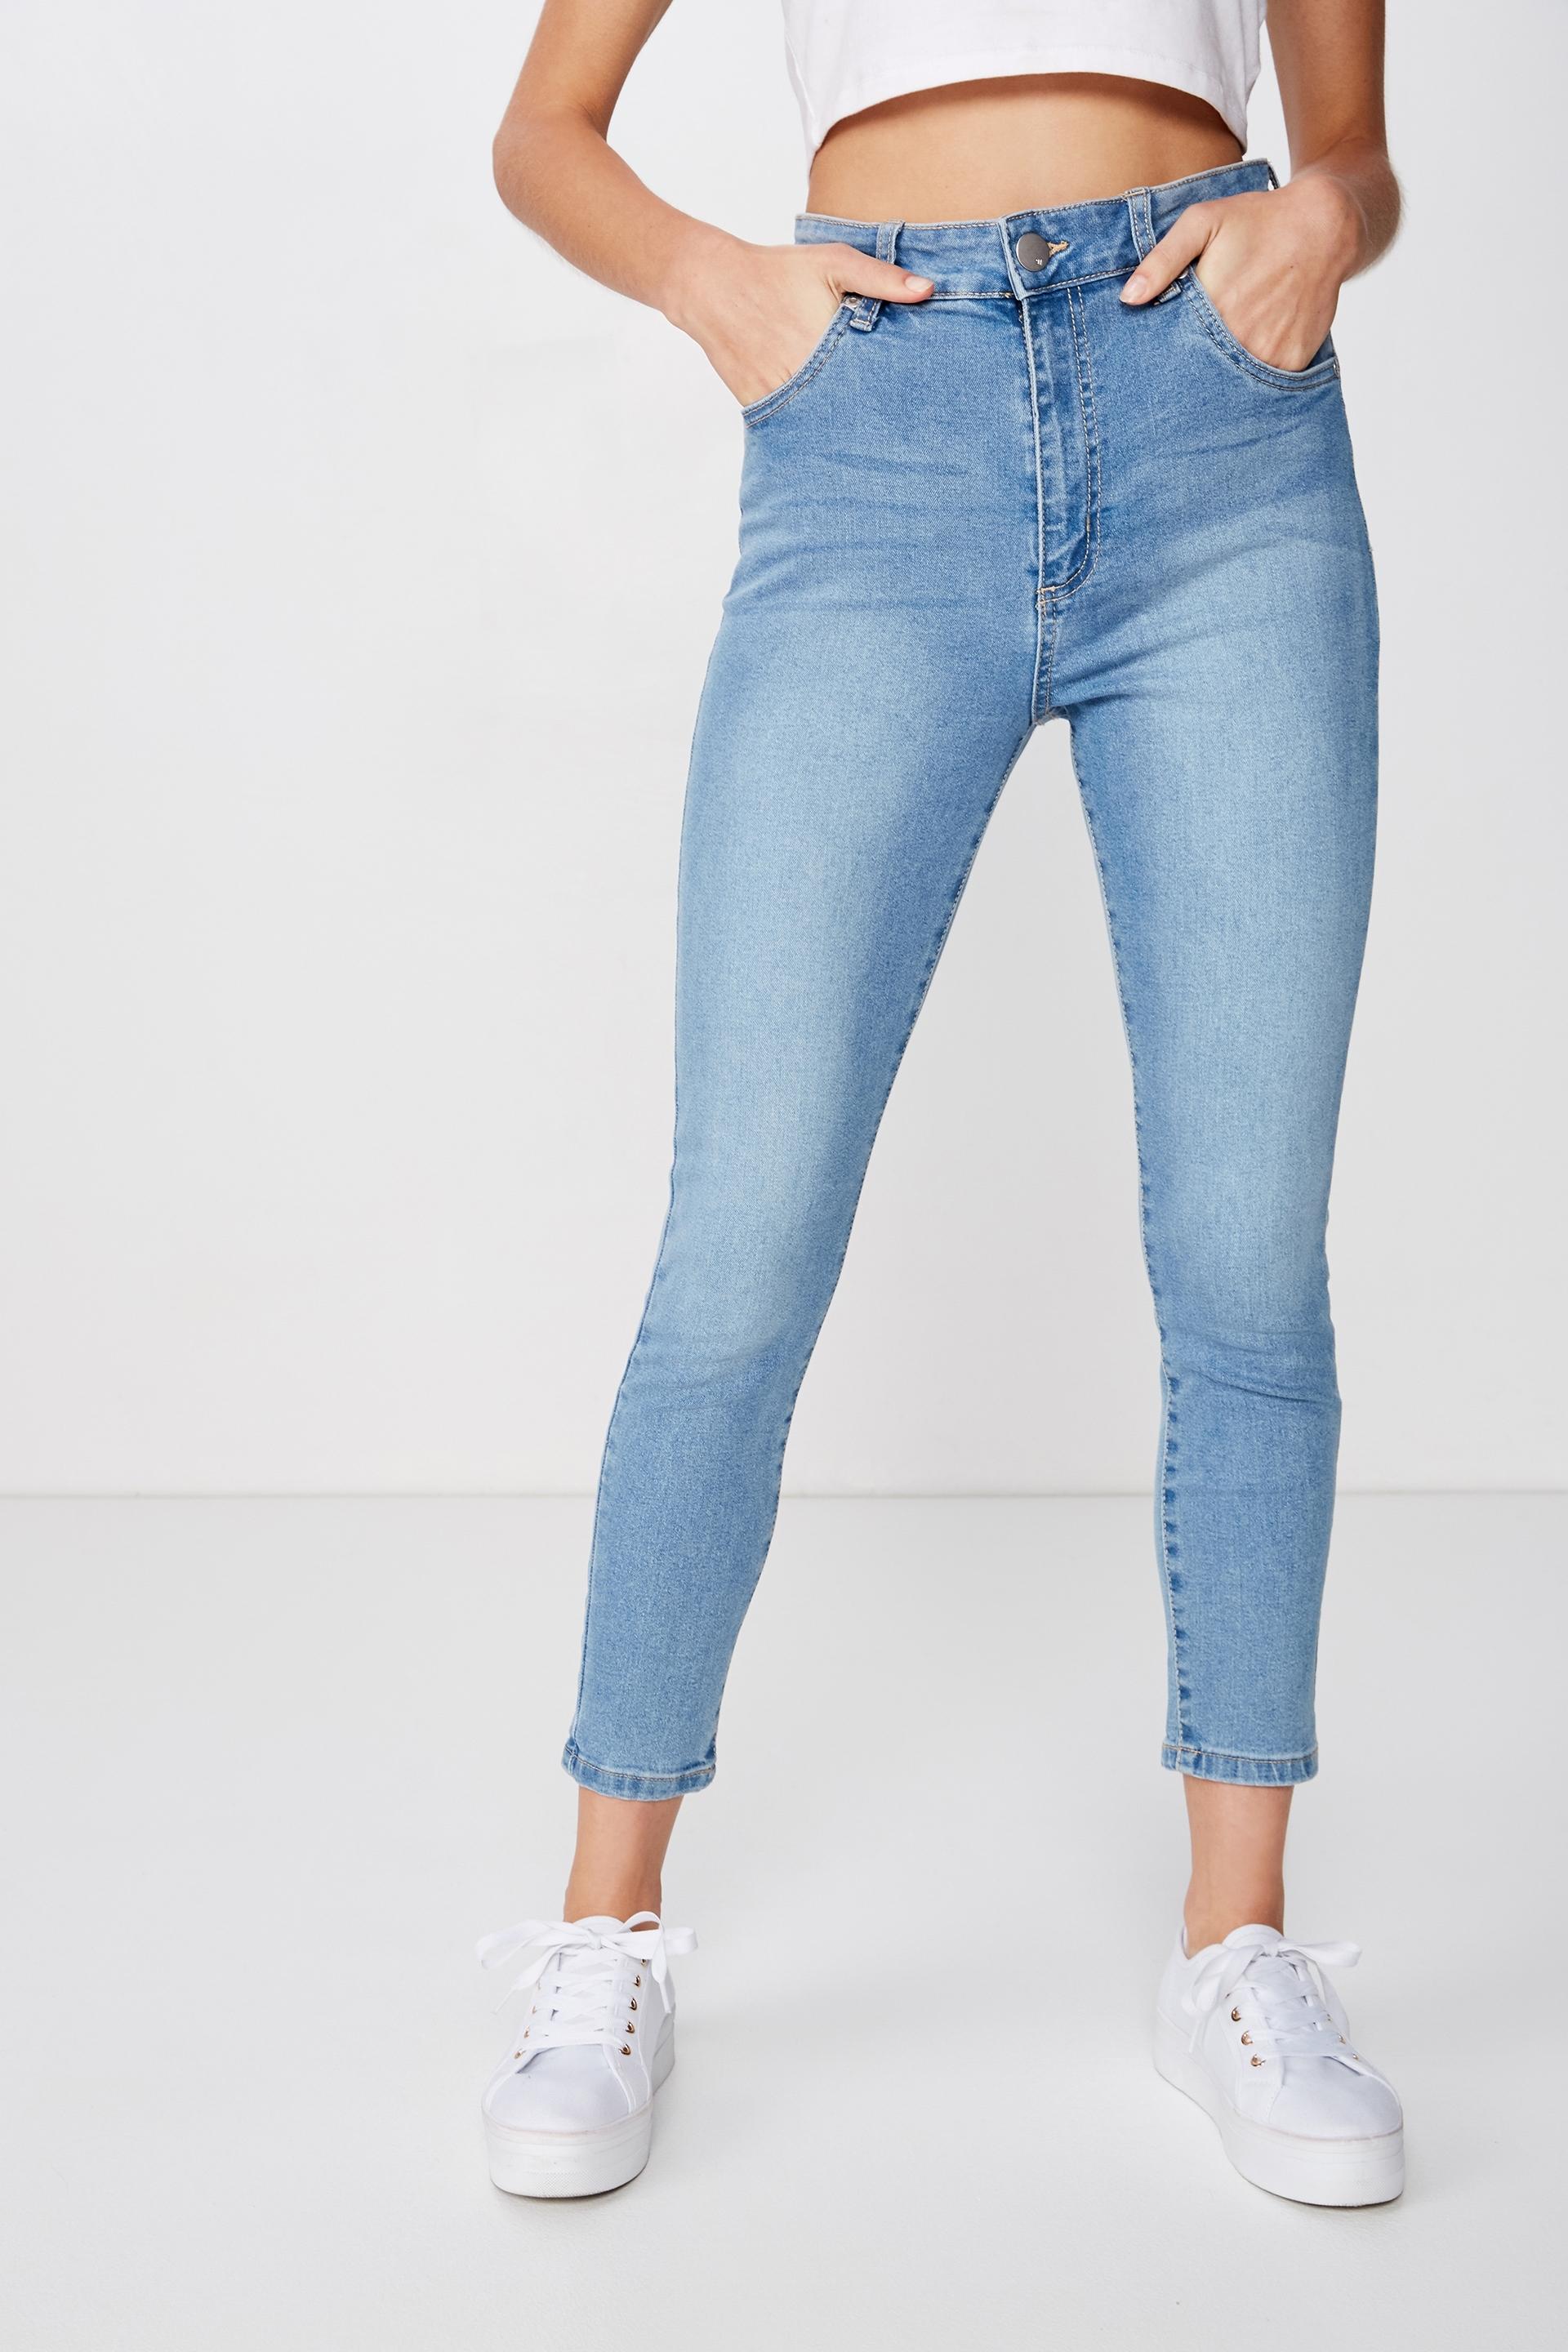 High rise grazer skinny jean - mid blue Cotton On Jeans | Superbalist.com